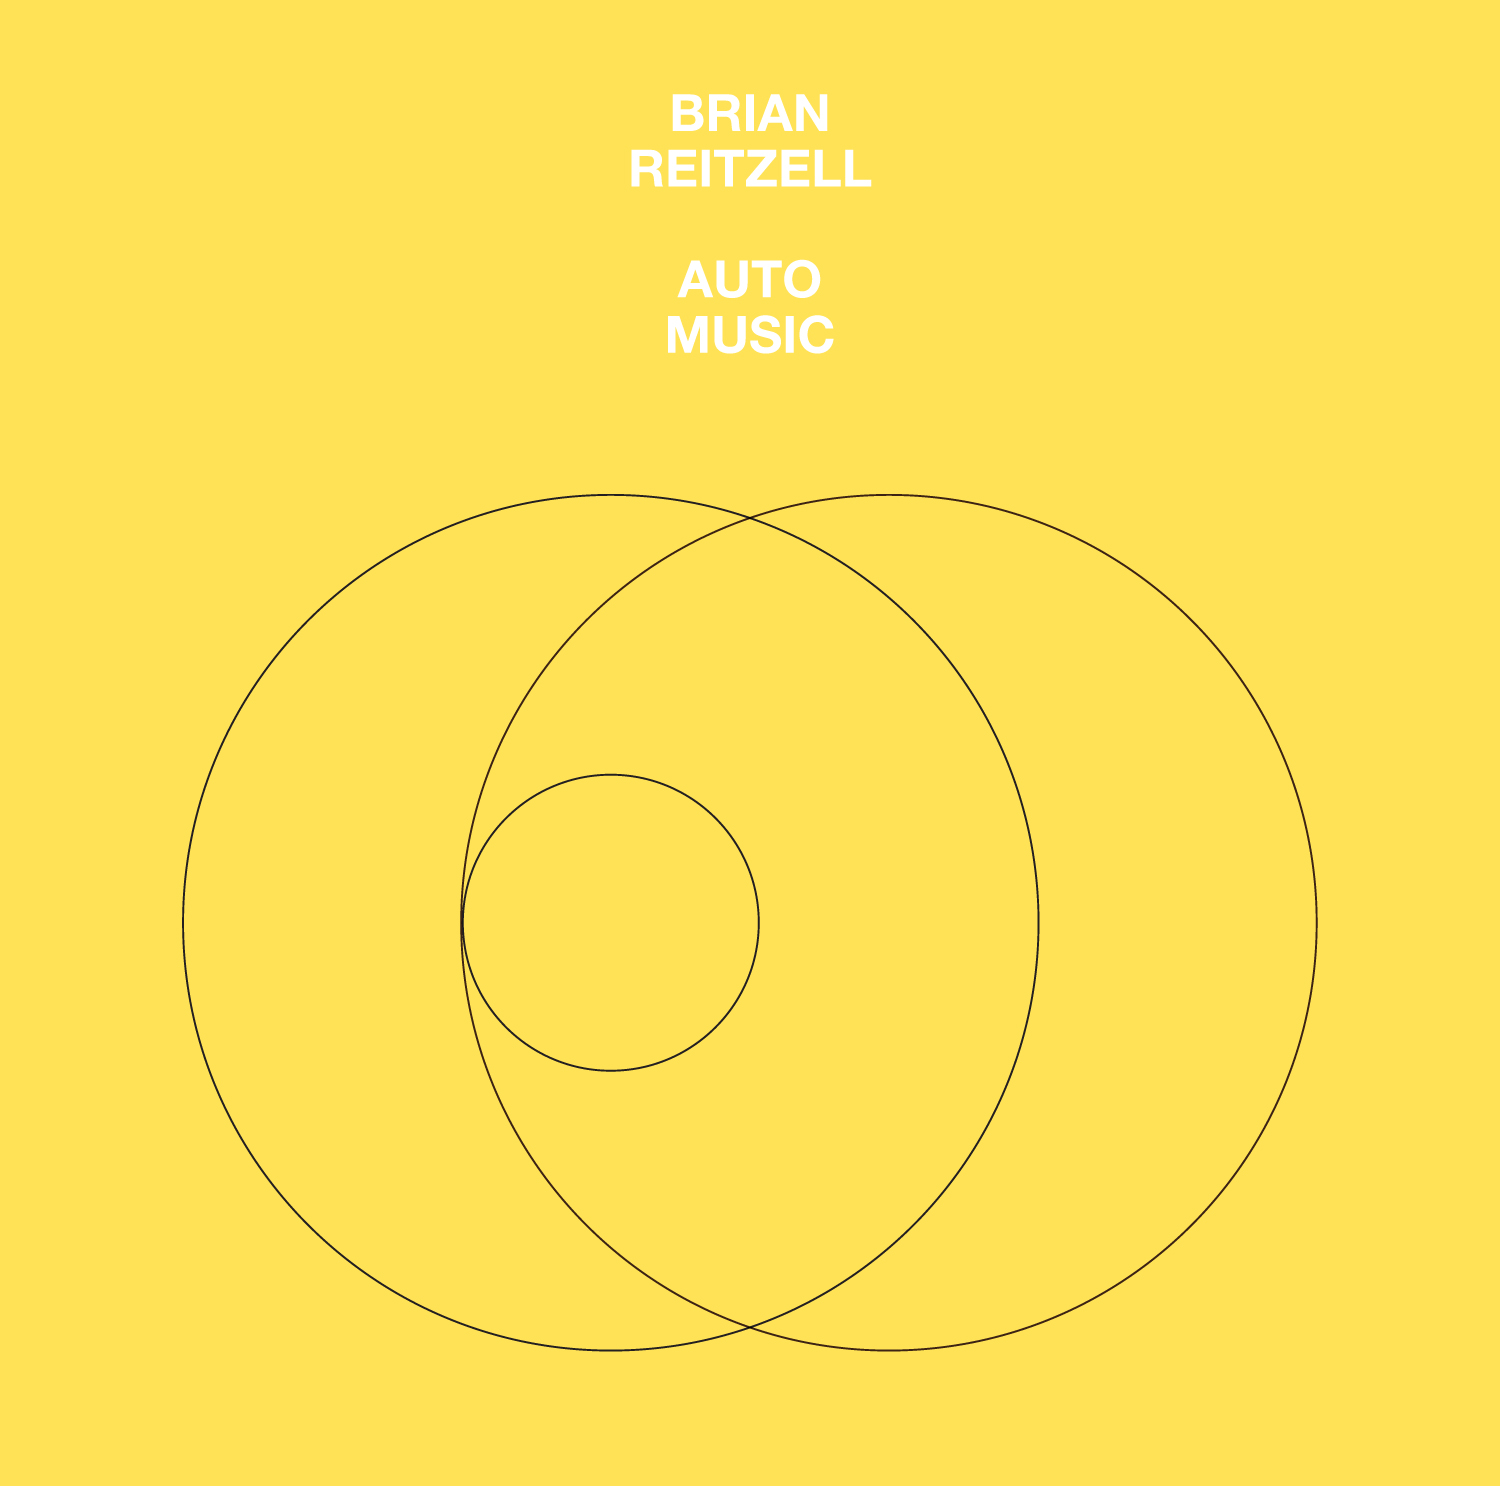 Cover de Brian Reitzell extraite du site du label